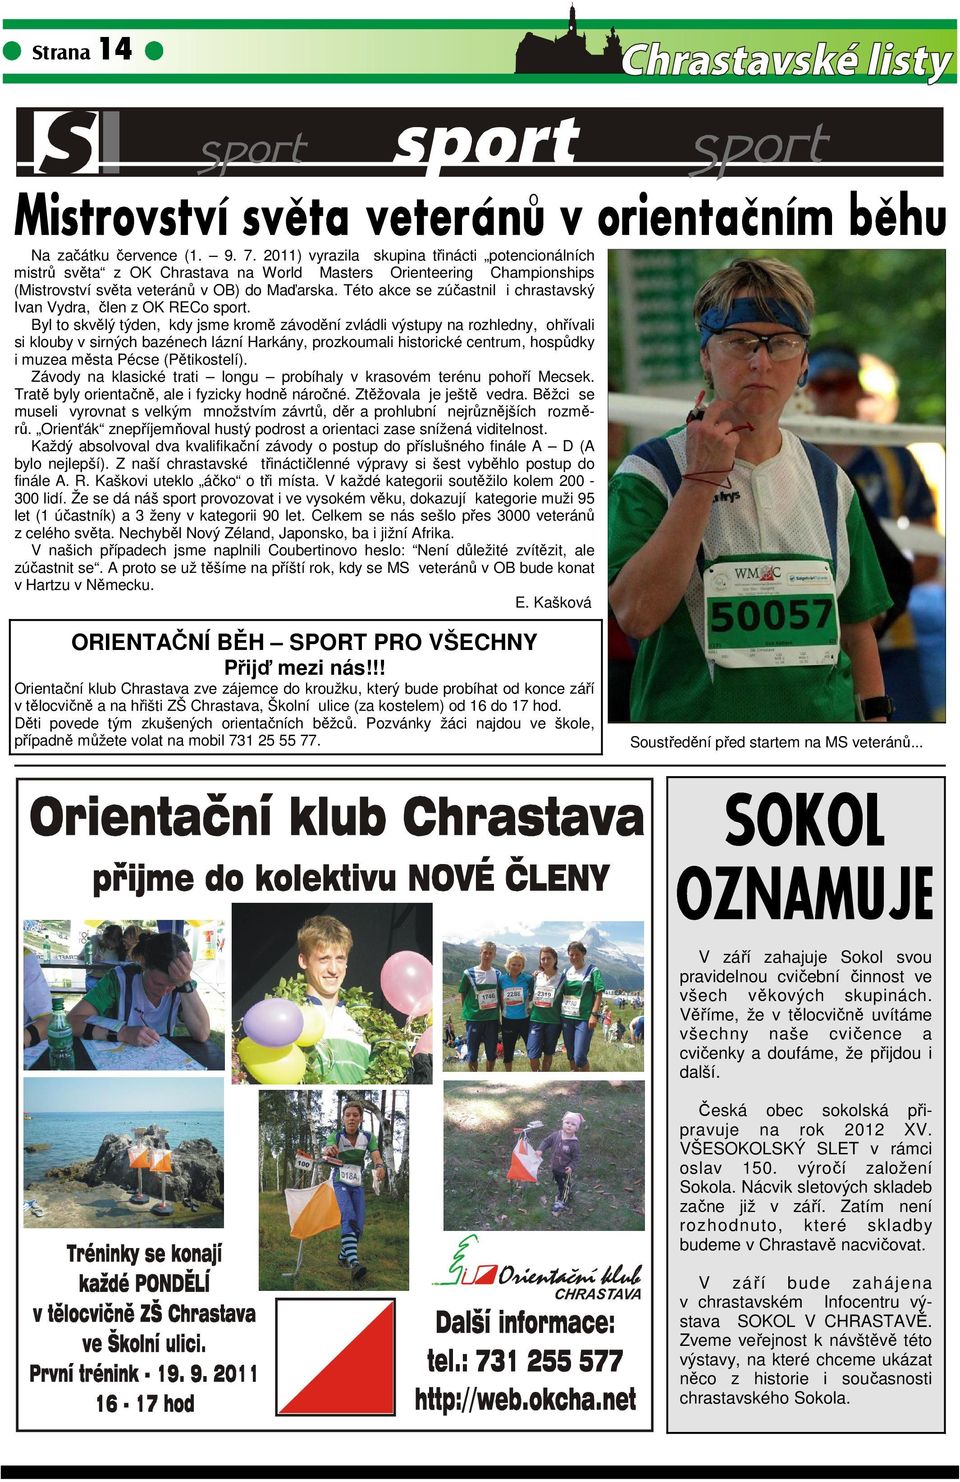 Této akce se zúčastnil i chrastavský Ivan Vydra, člen z OK RECo sport.